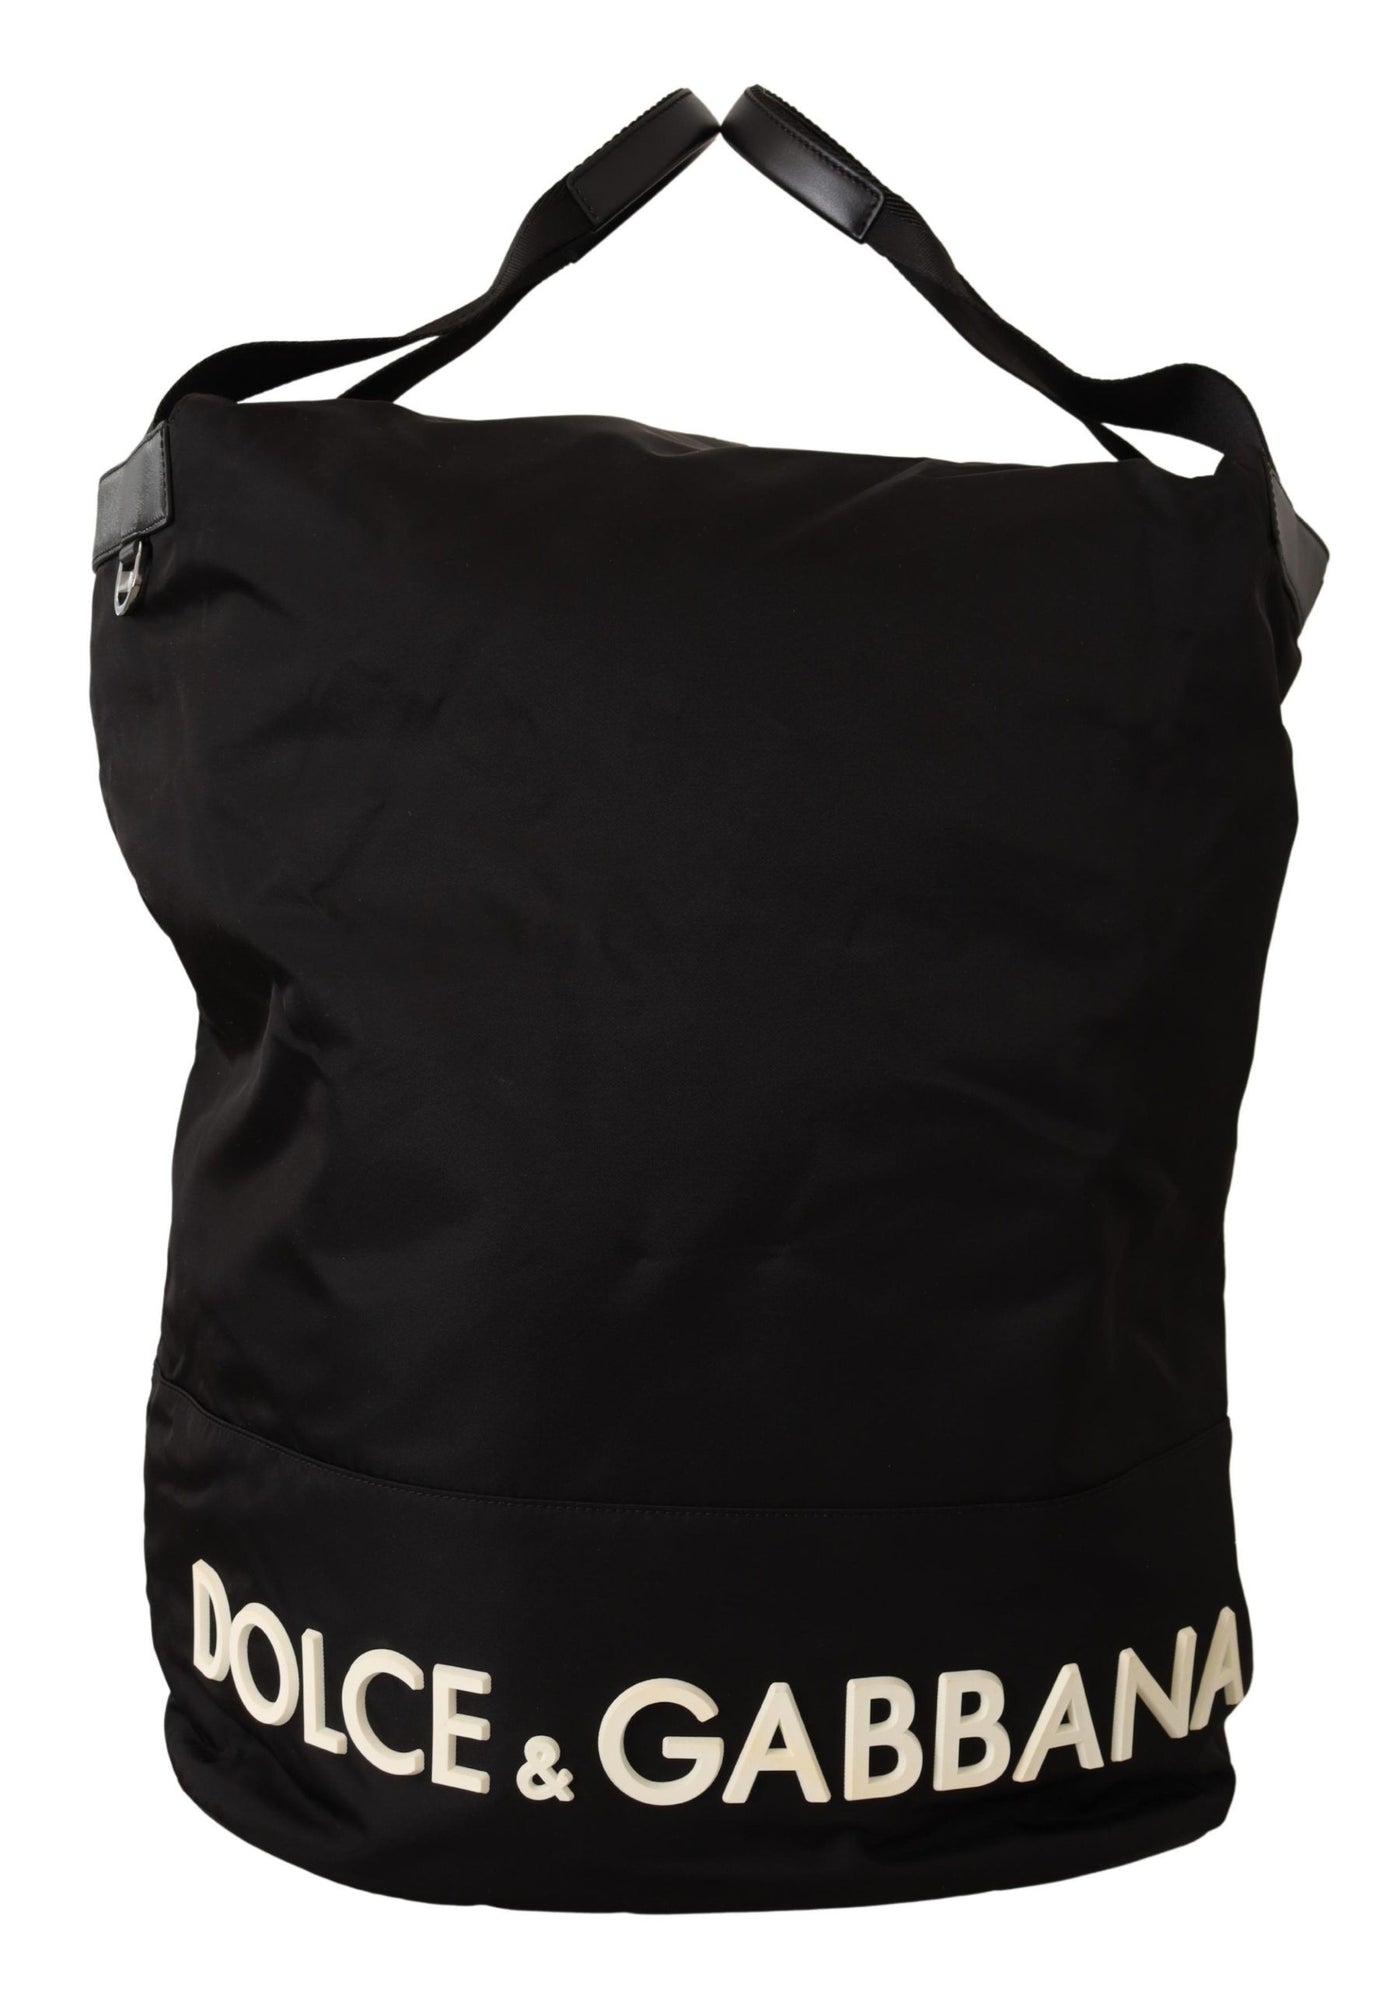 Dolce & Gabbana Black Nylon Leather Travel School Men Tote Bag